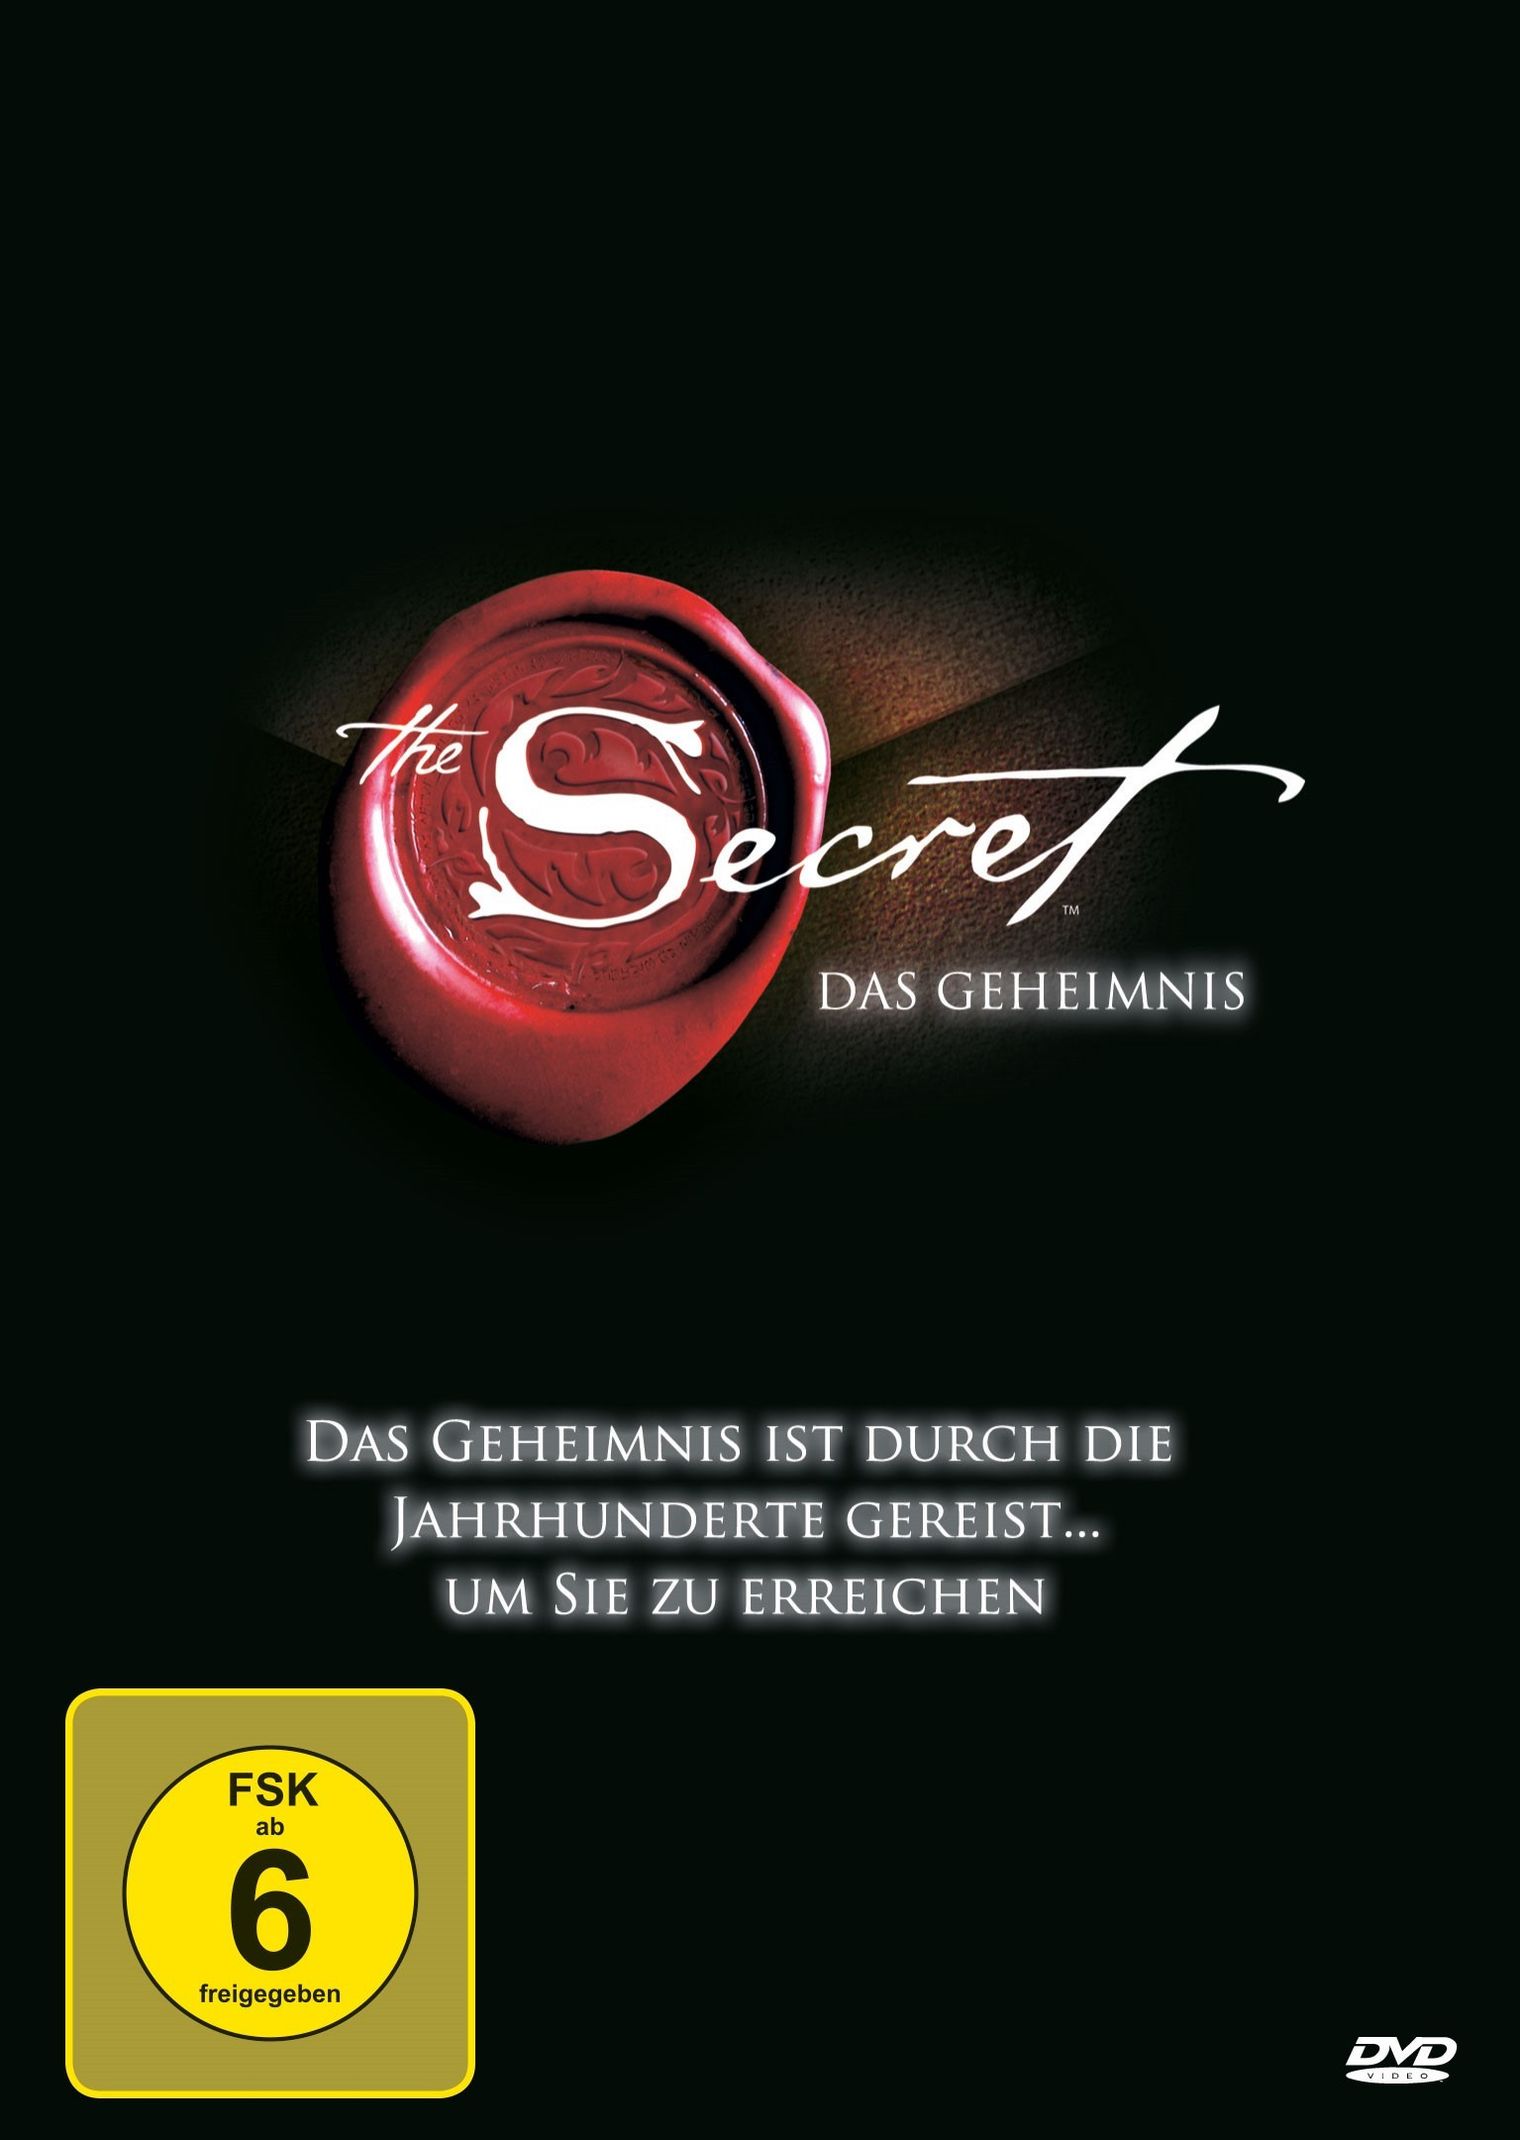 The Secret Das Geheimnis Dvd Bei Weltbild Ch Bestellen